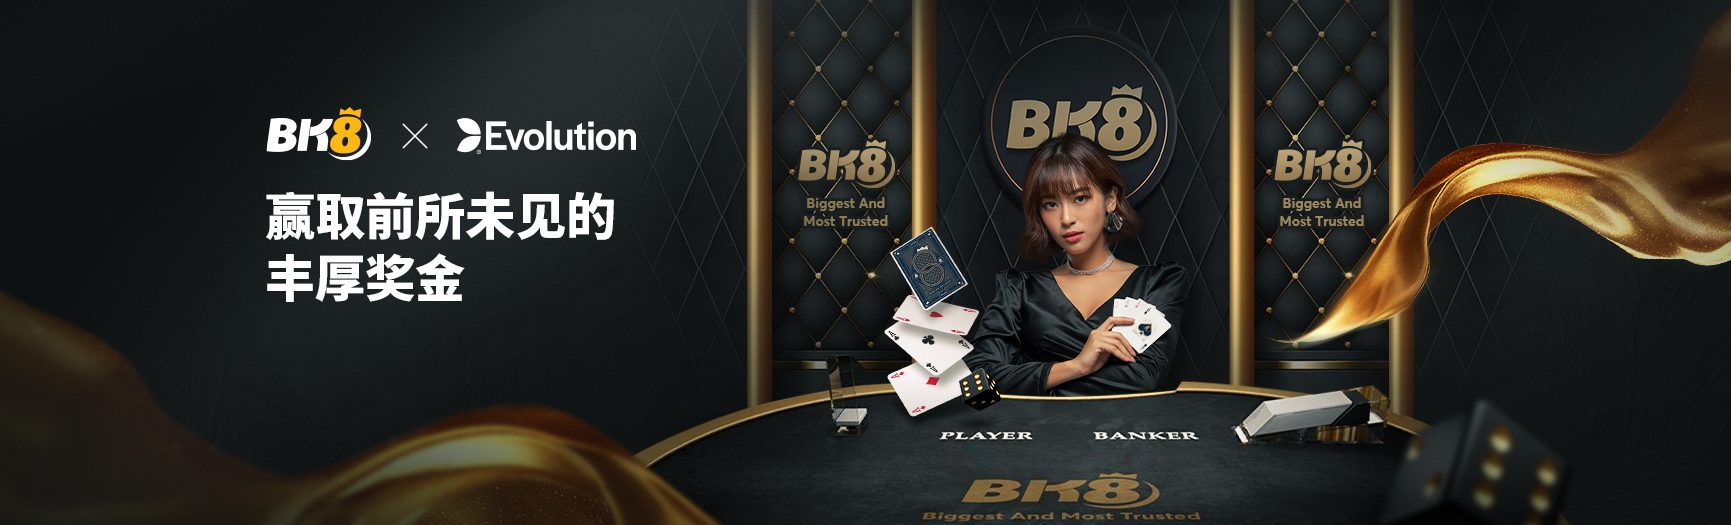 BK8-x-Evolution-Gaming-丰厚奖金